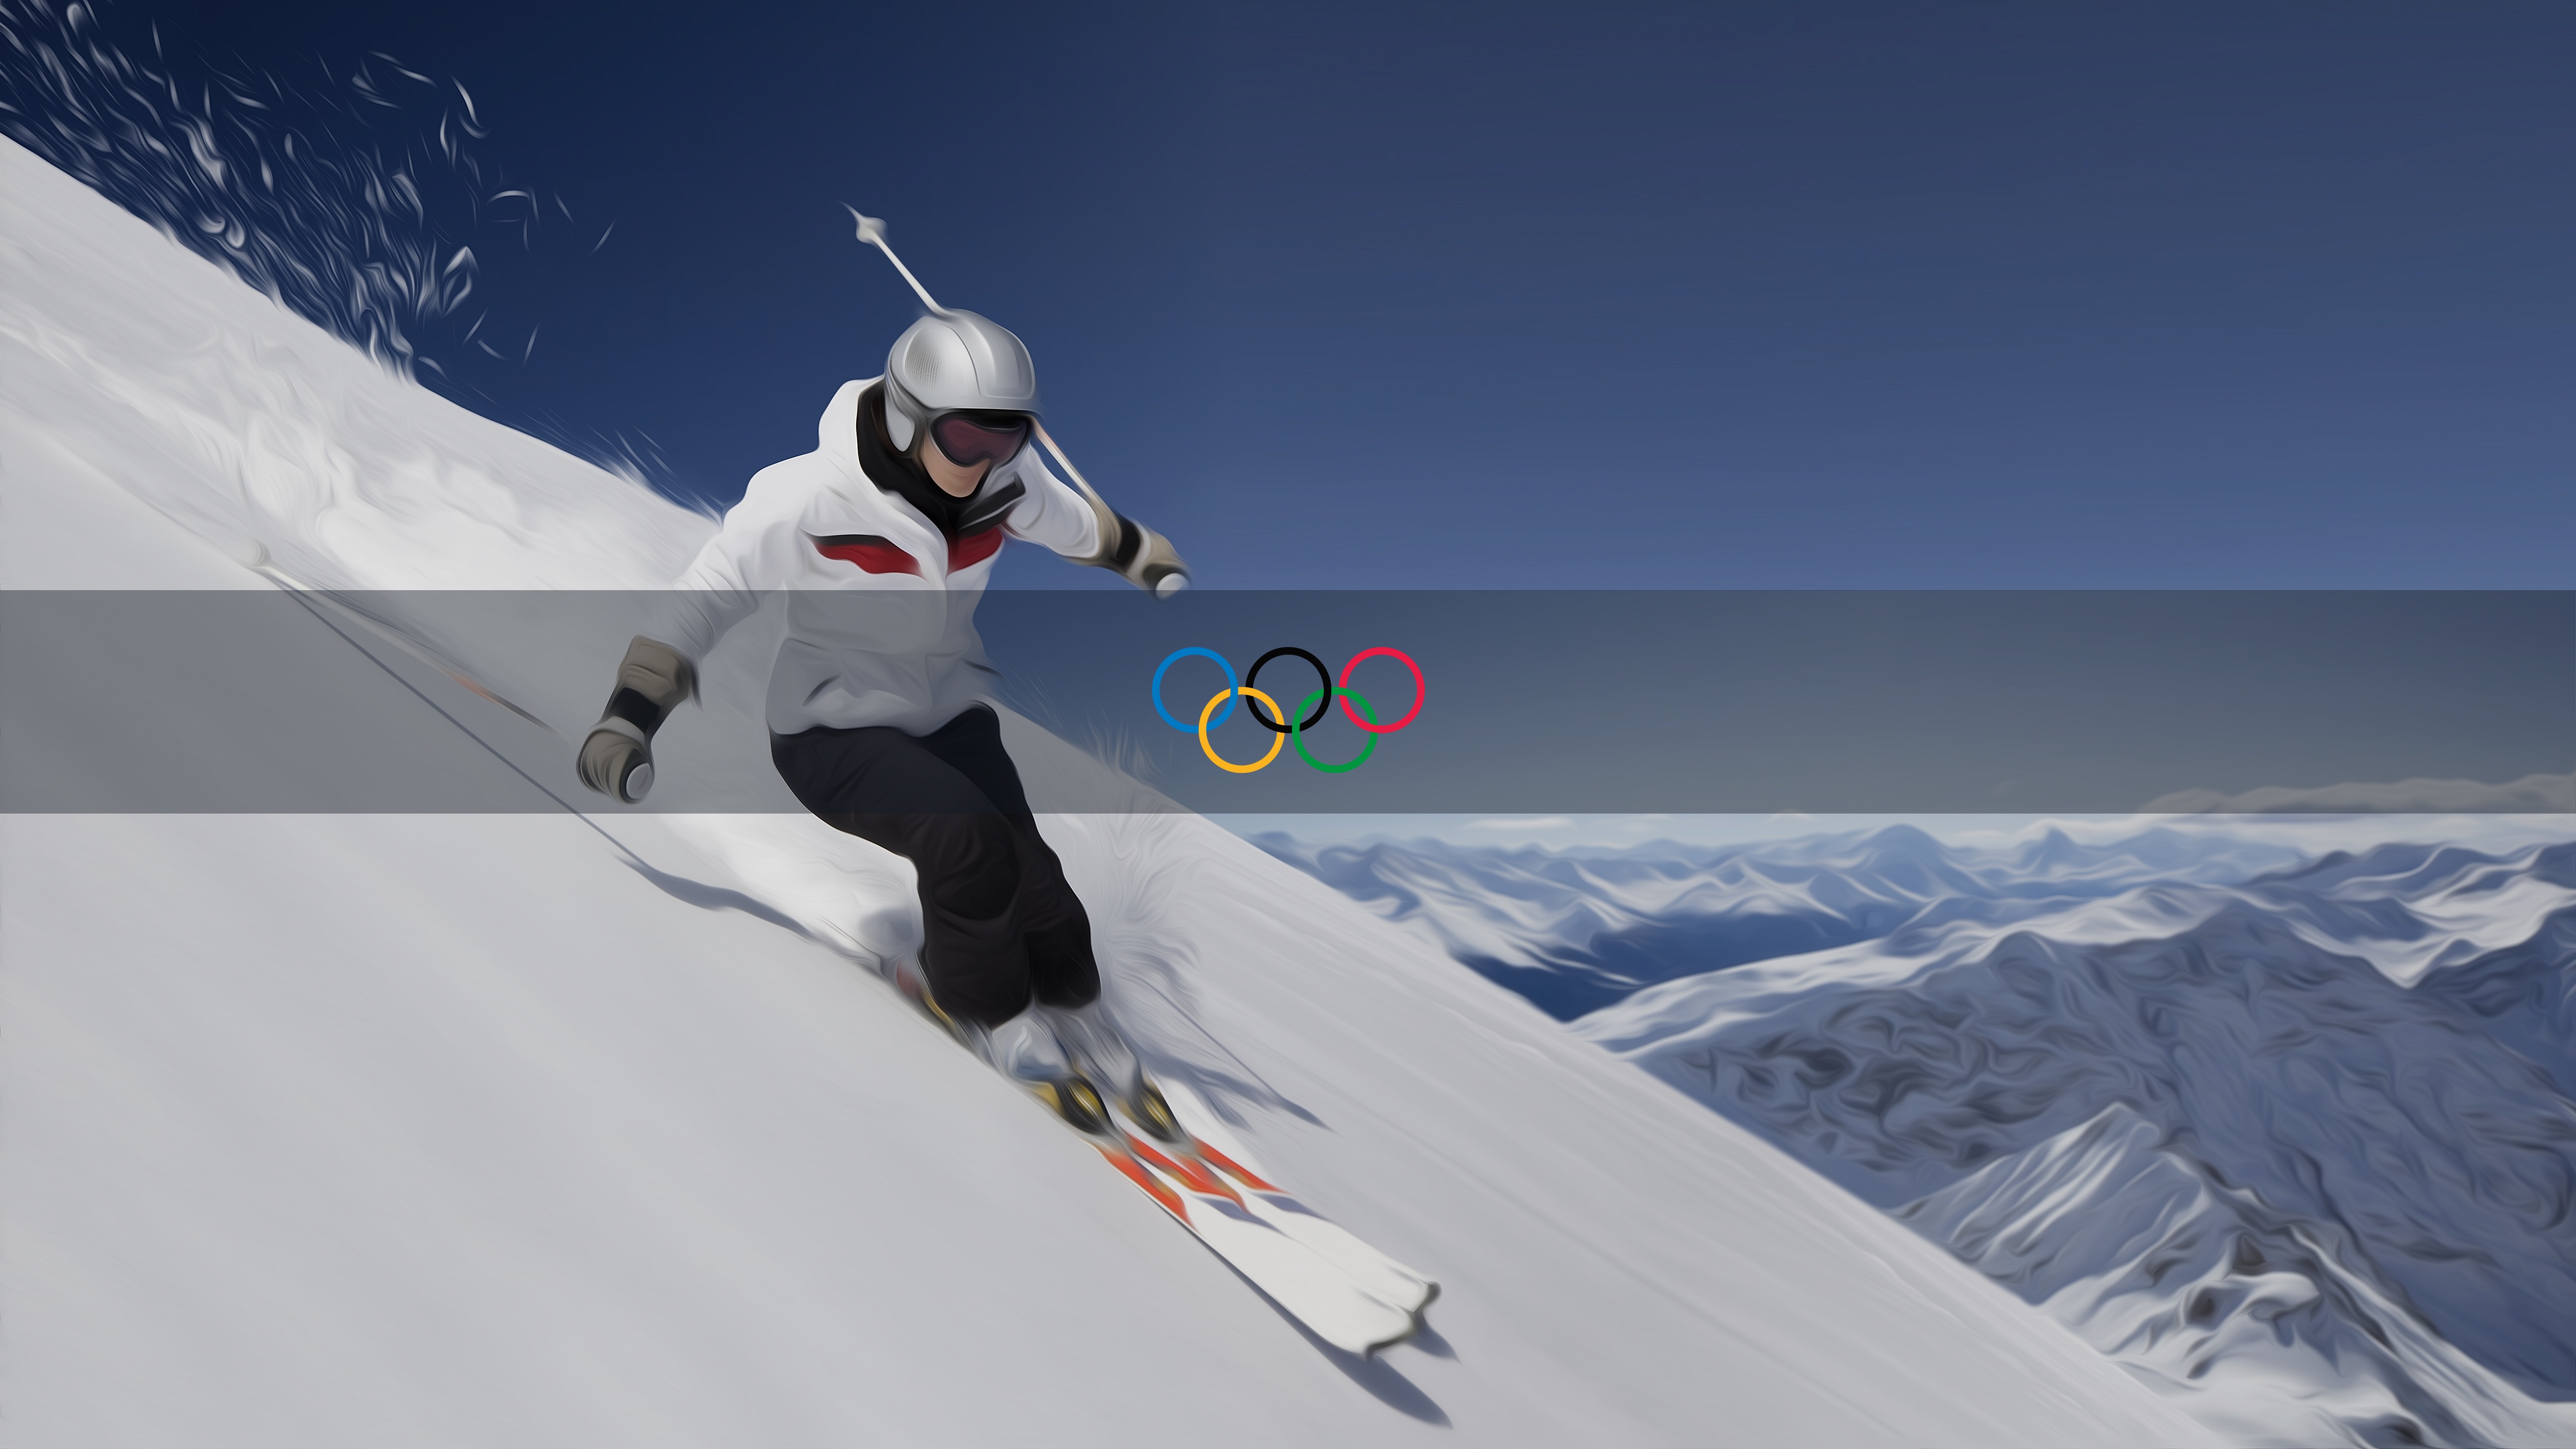 papel pintado olímpico,nieve,esquí,deporte extremo,recreación al aire libre,esquí de estilo libre